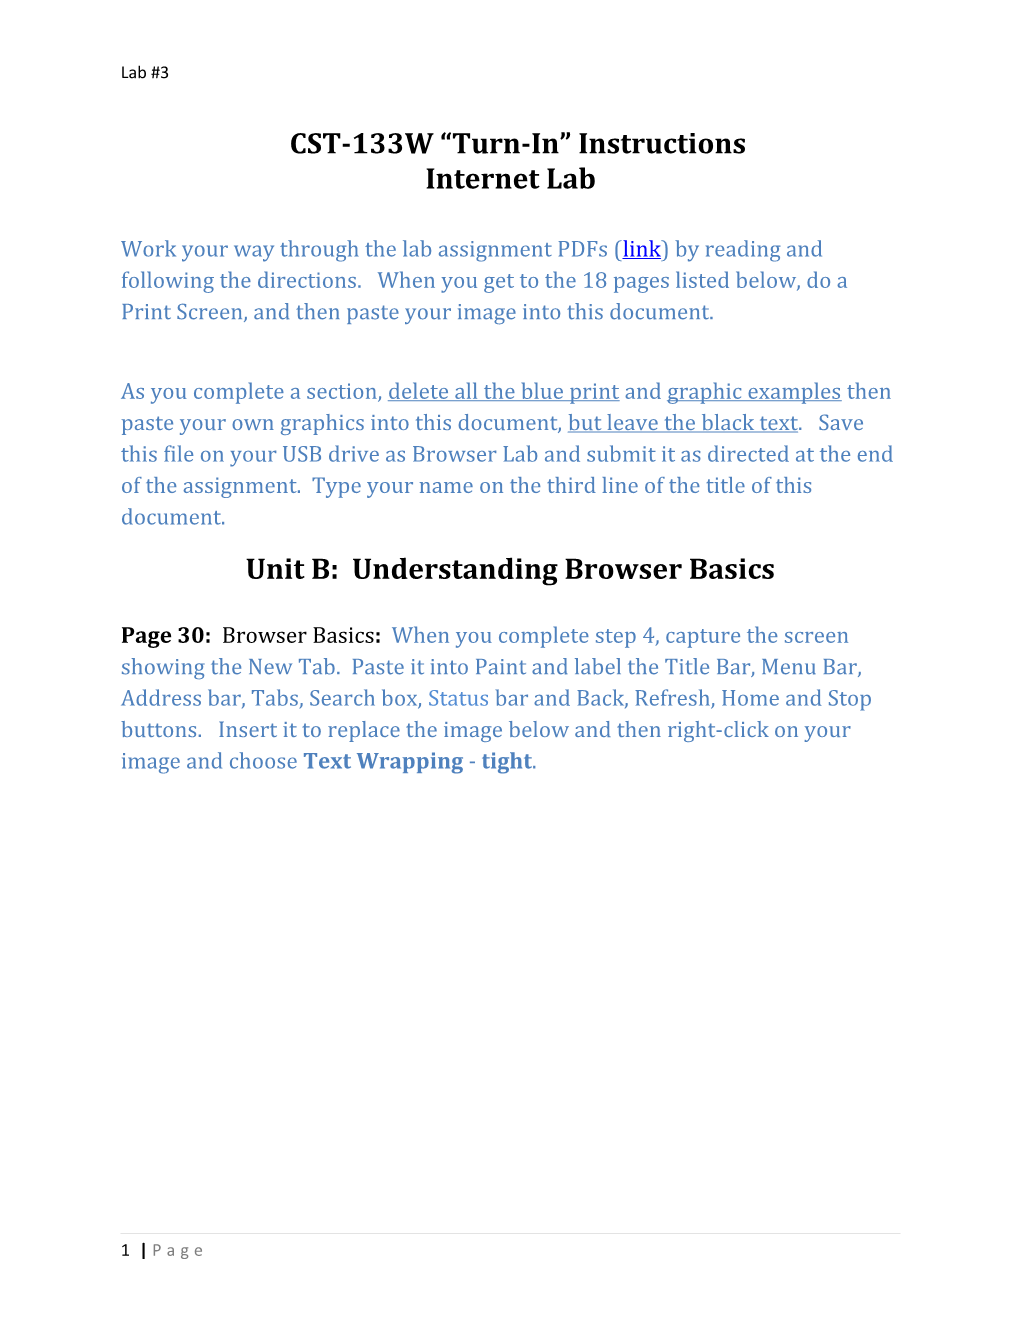 Unit B: Understanding Browser Basics